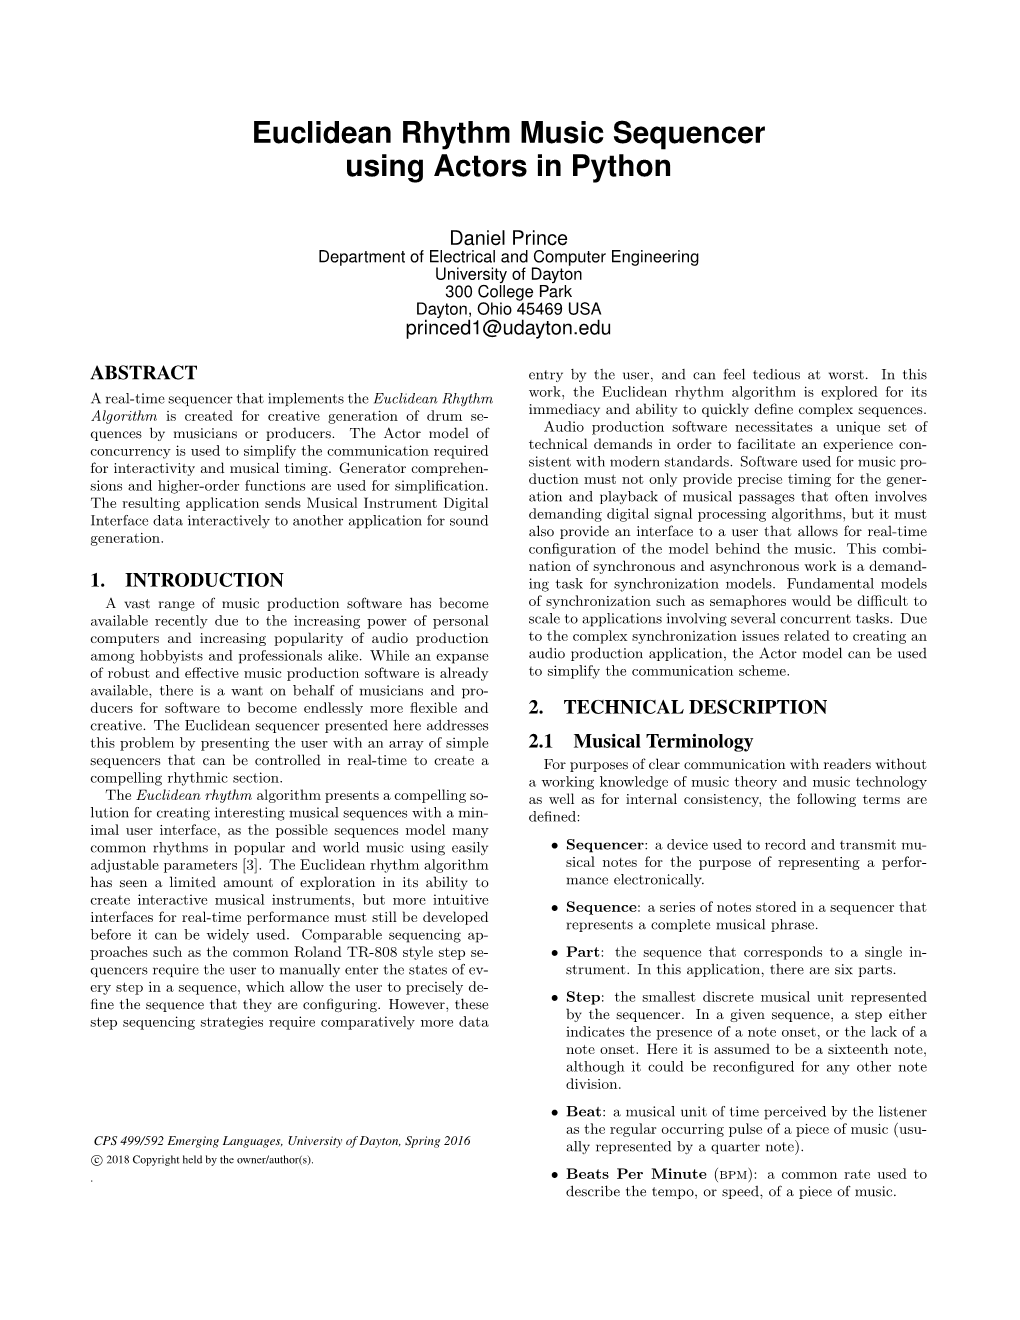 Euclidean Rhythm Music Sequencer Using Actors in Python